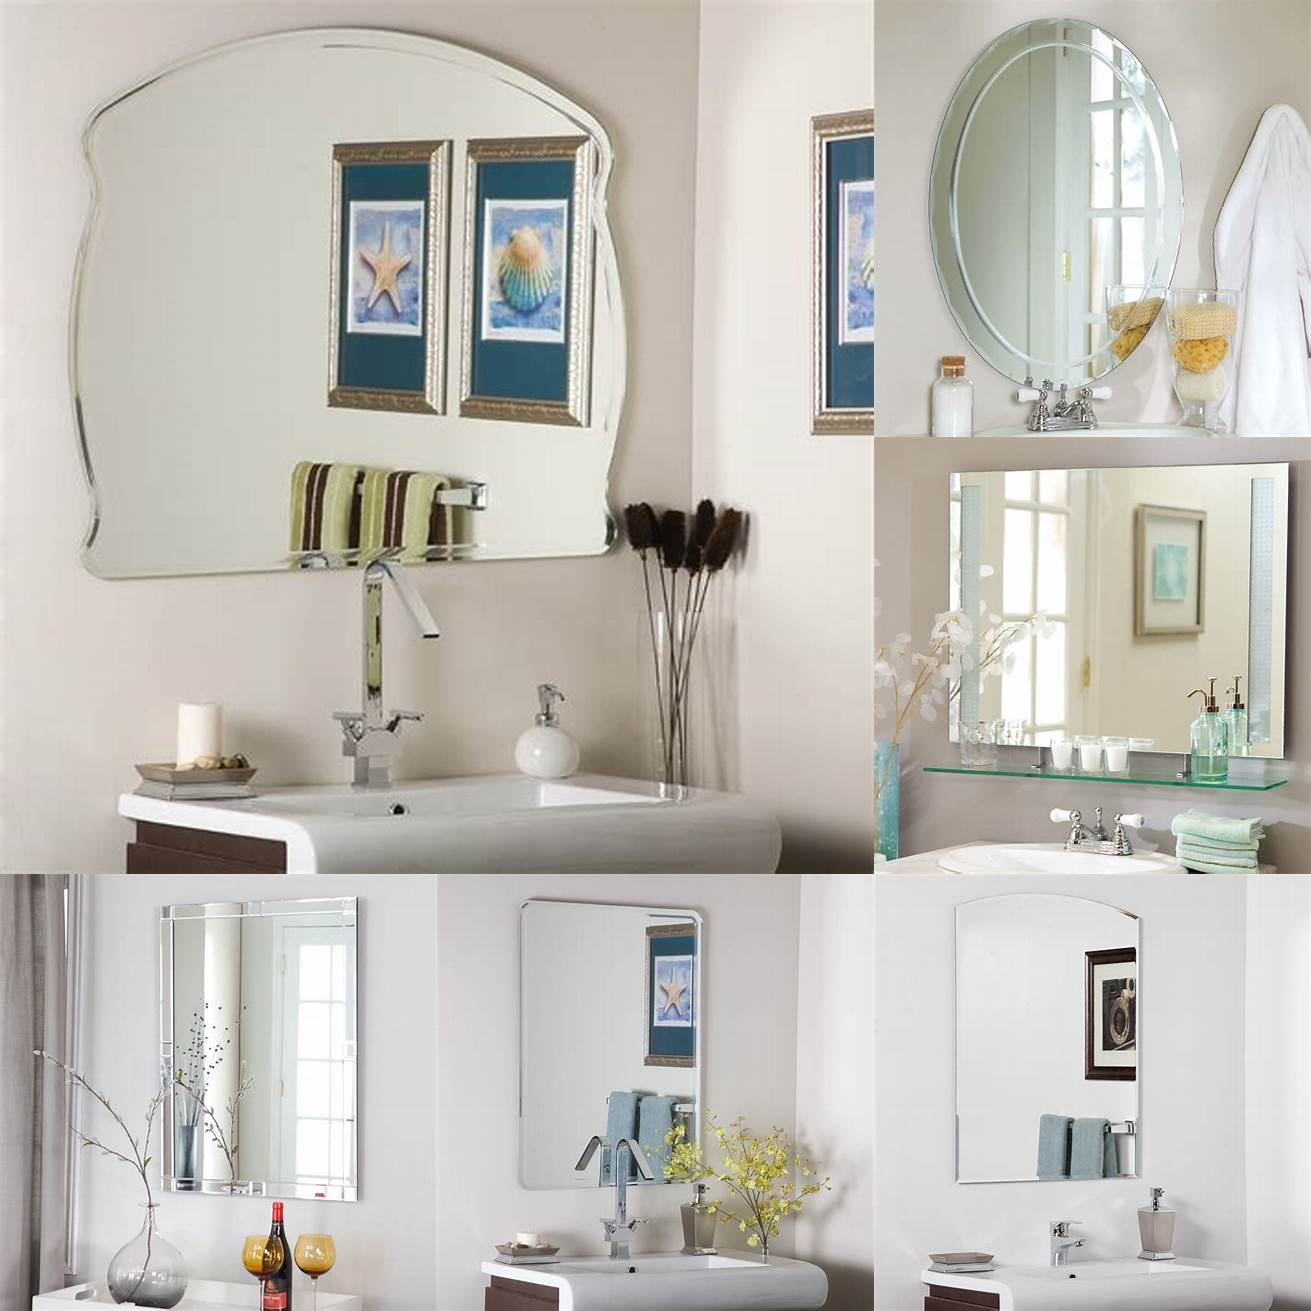 Frameless bathroom mirror with decorative wall sconces